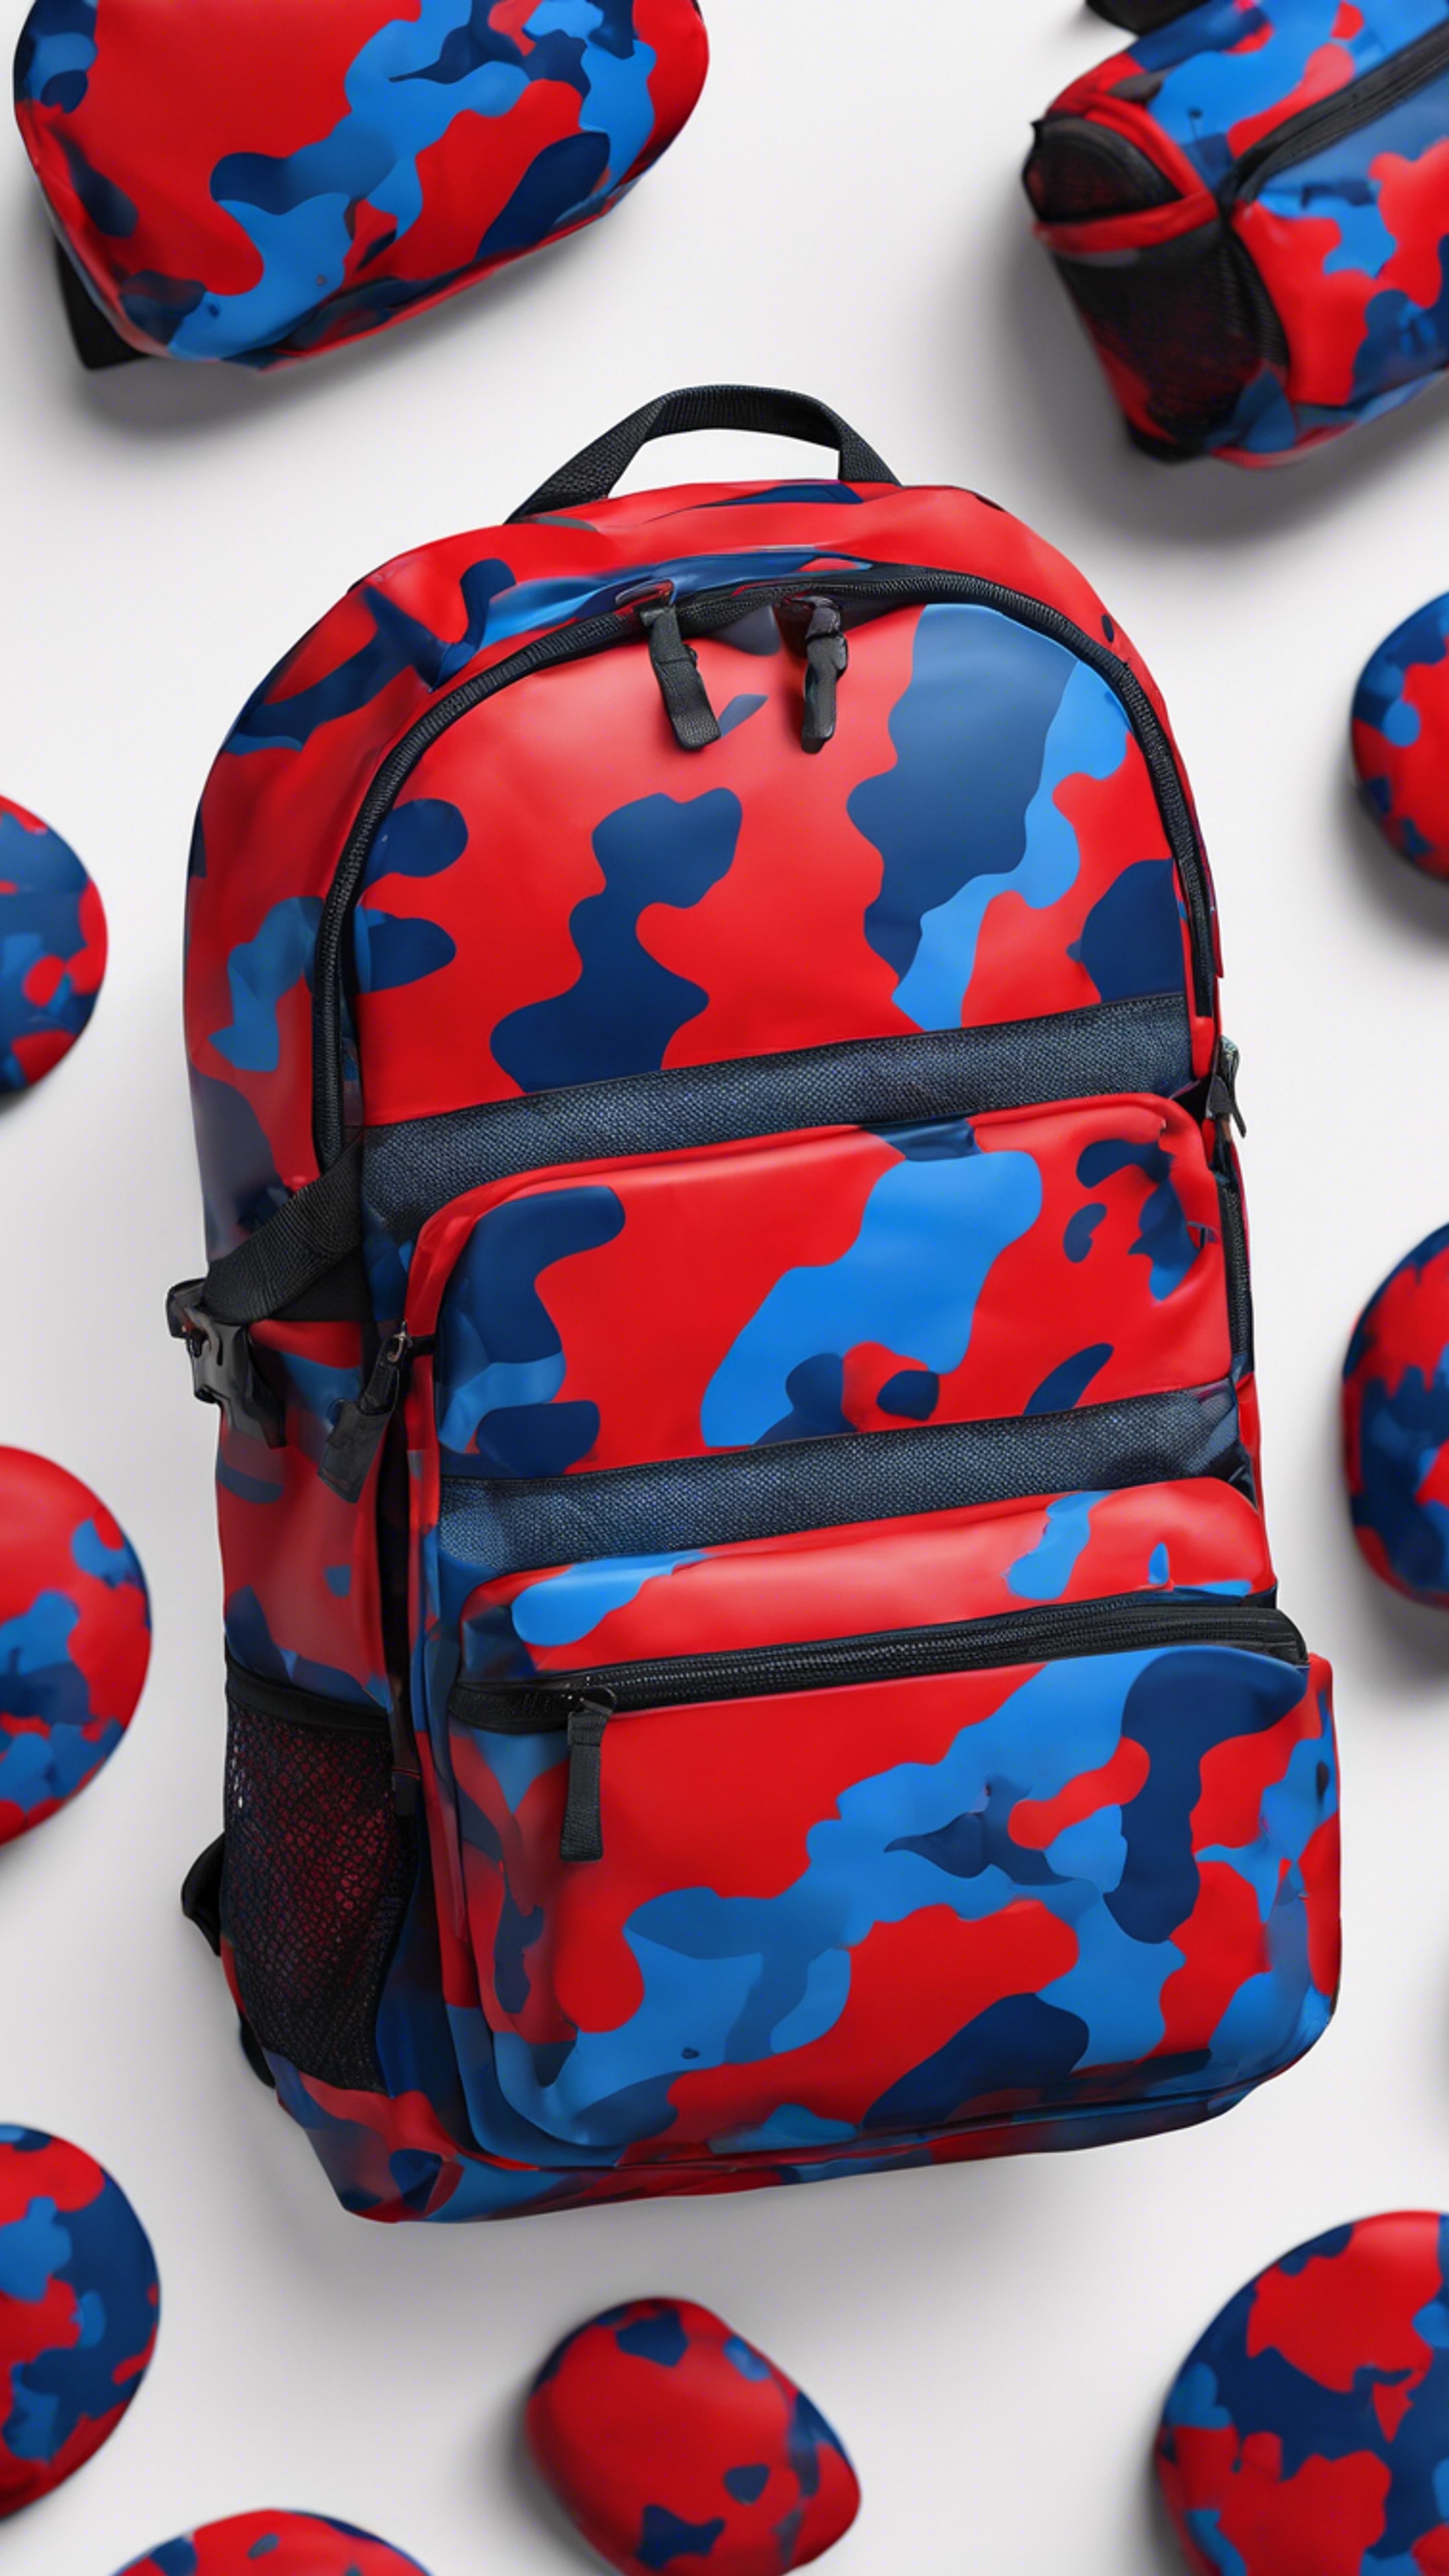 A seamless pattern of red and blue camouflage like on a sports backpack. Hình nền[ebf2c58b20f943e08eab]